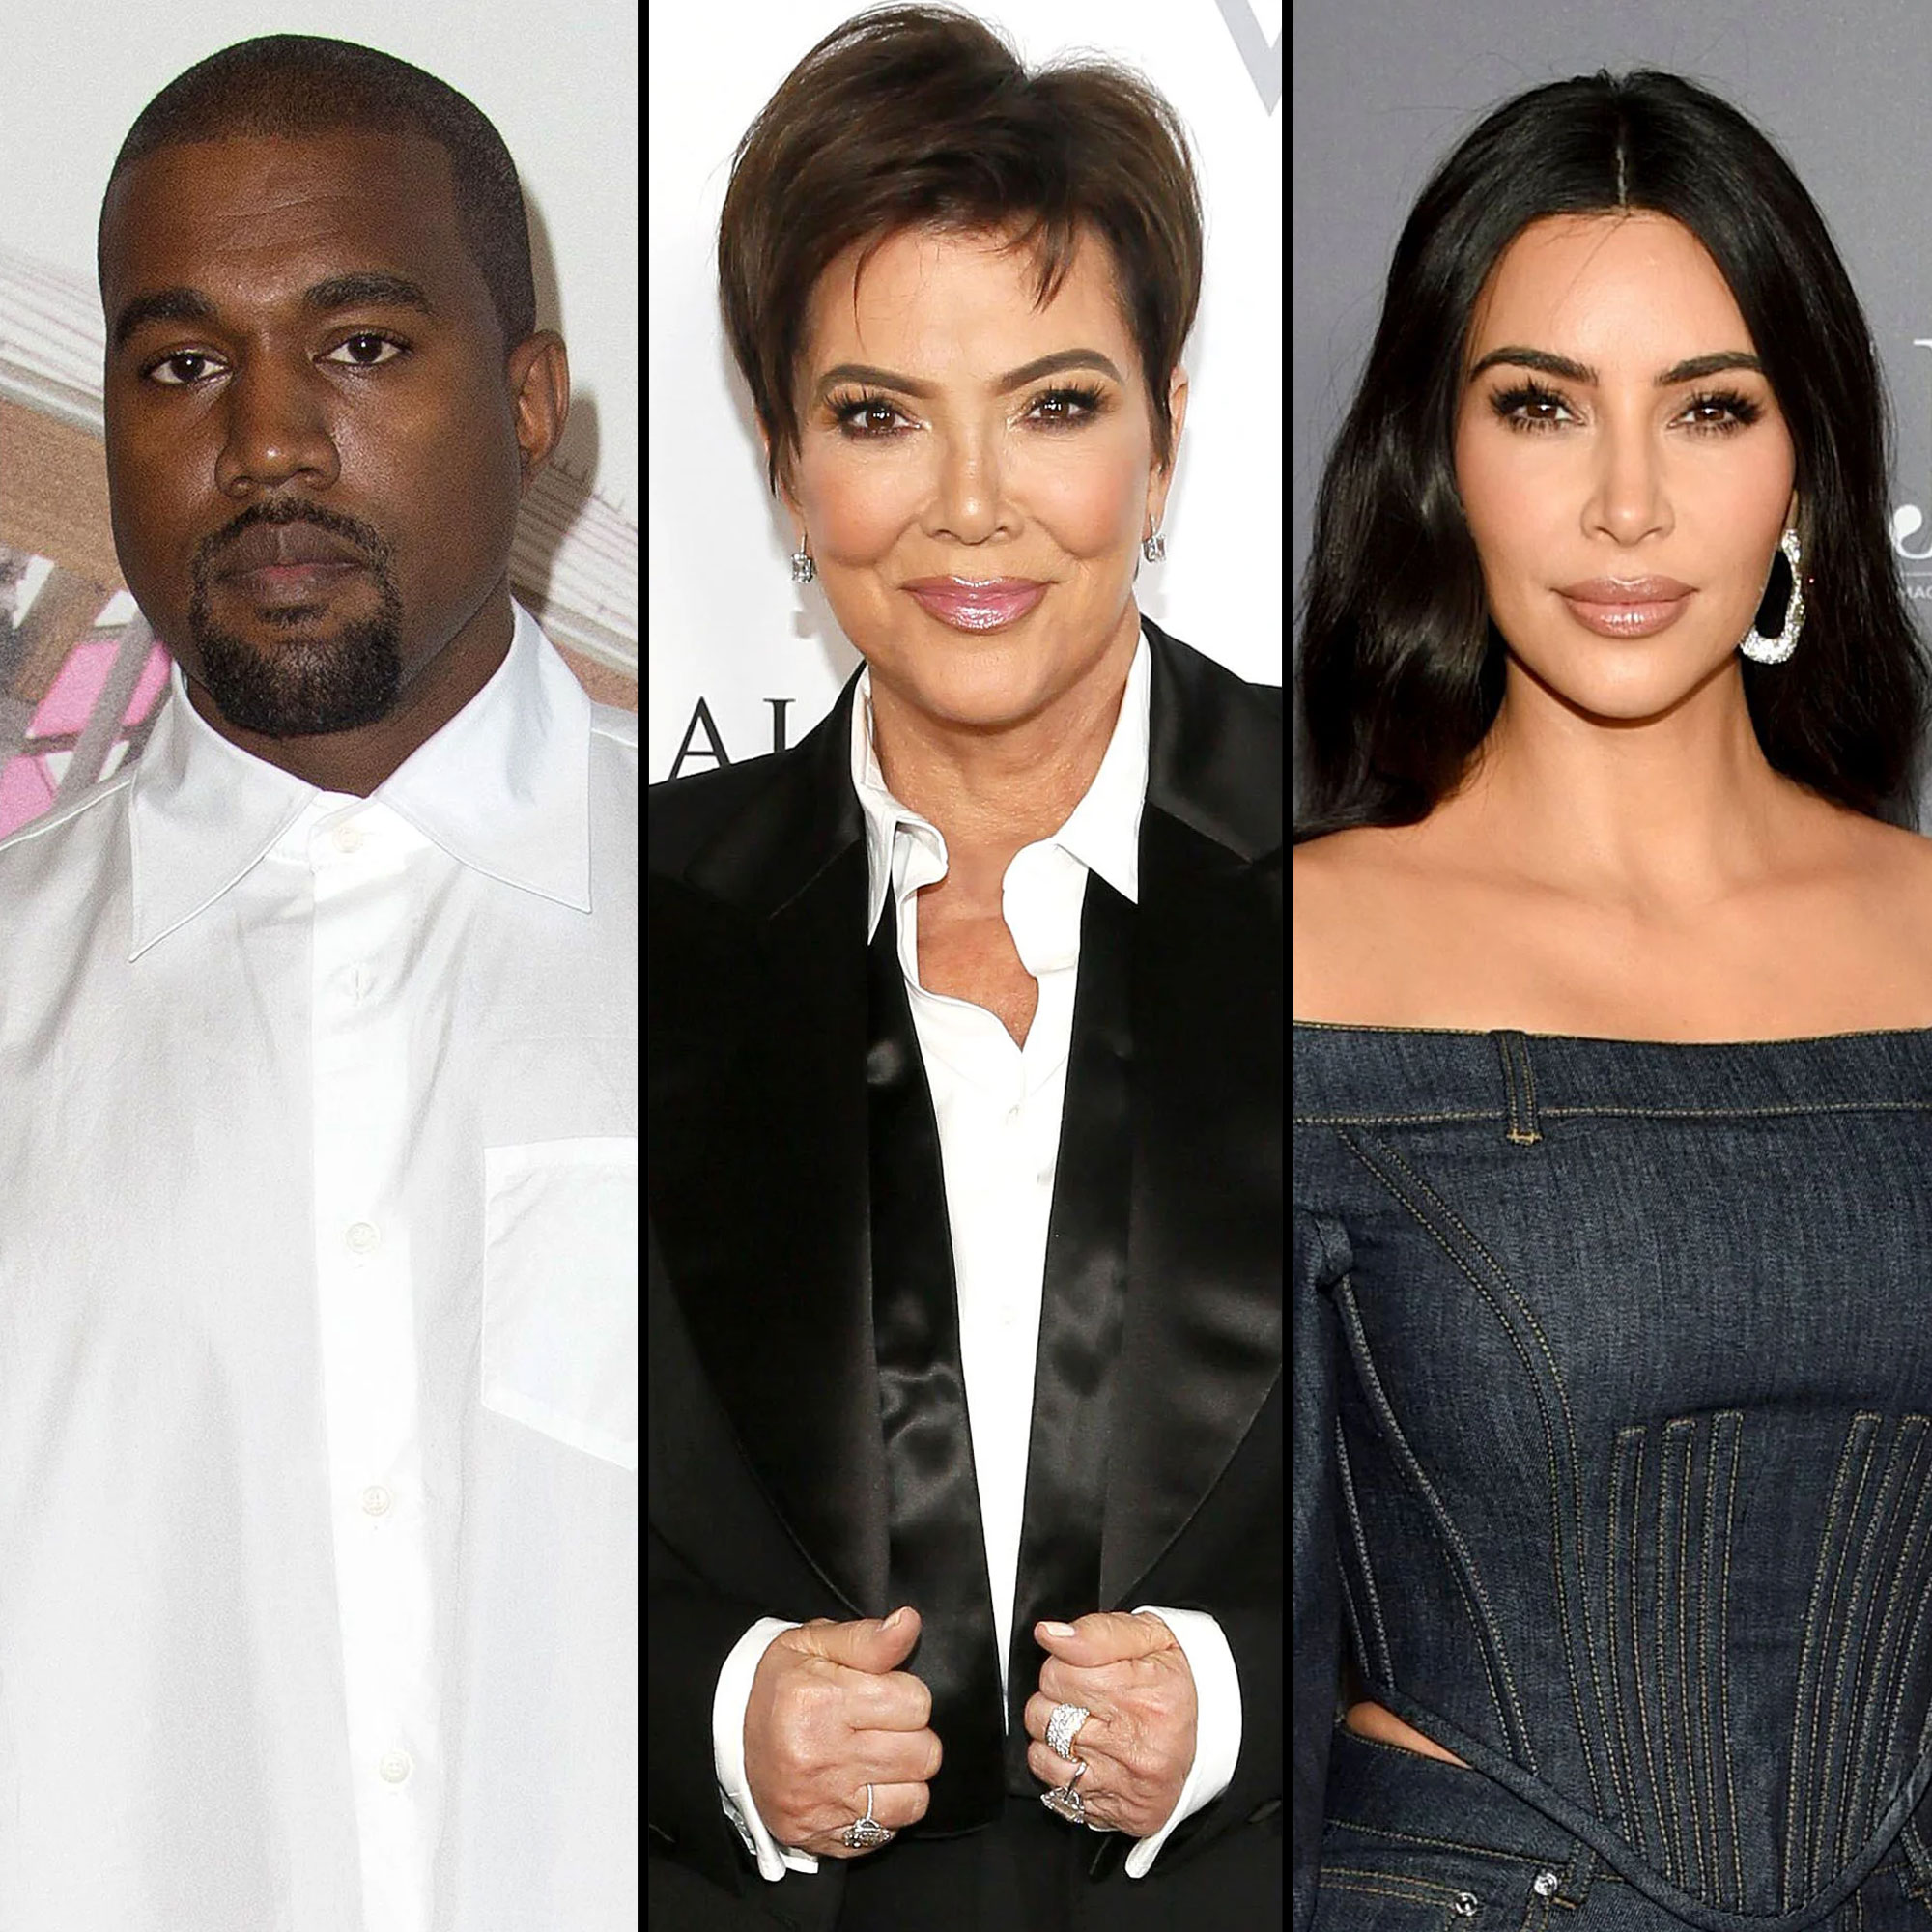 Porn Kris Jenner Sex Tape - Kanye West Calls Out Kris Jenner, Claims Porn 'Destroyed' Family